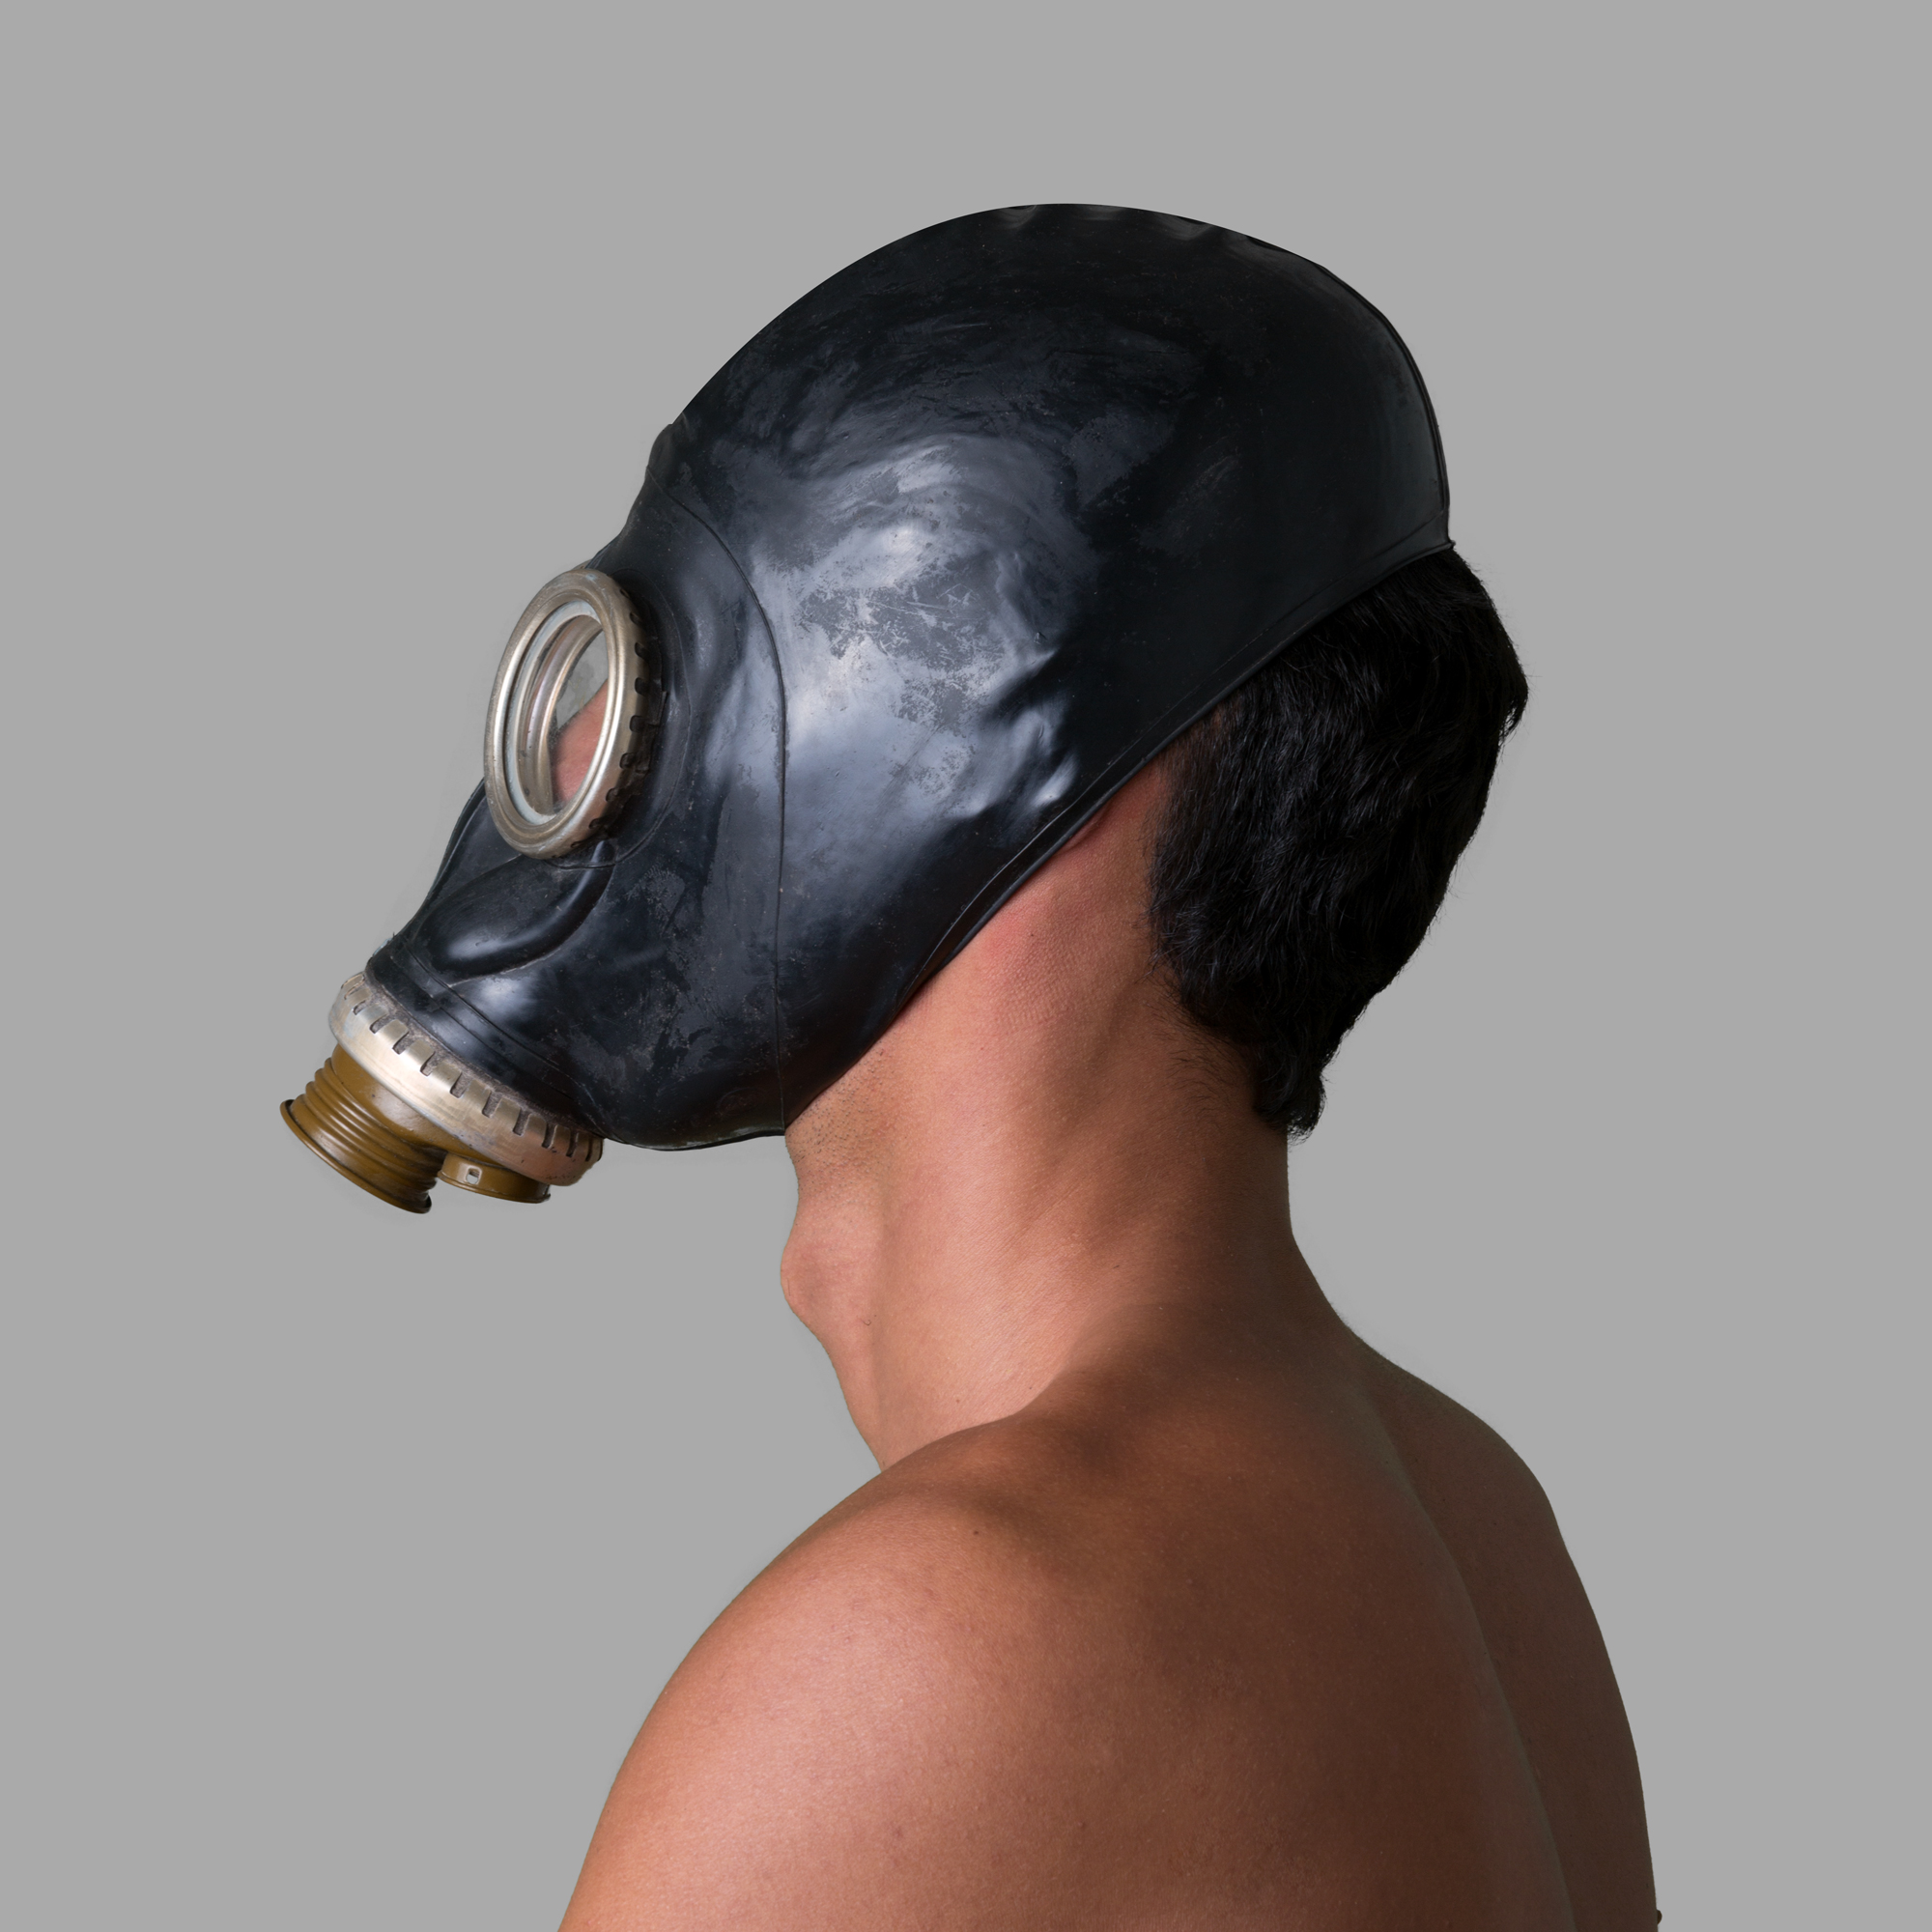 Acheter Masque à gaz BDSM chez MEO